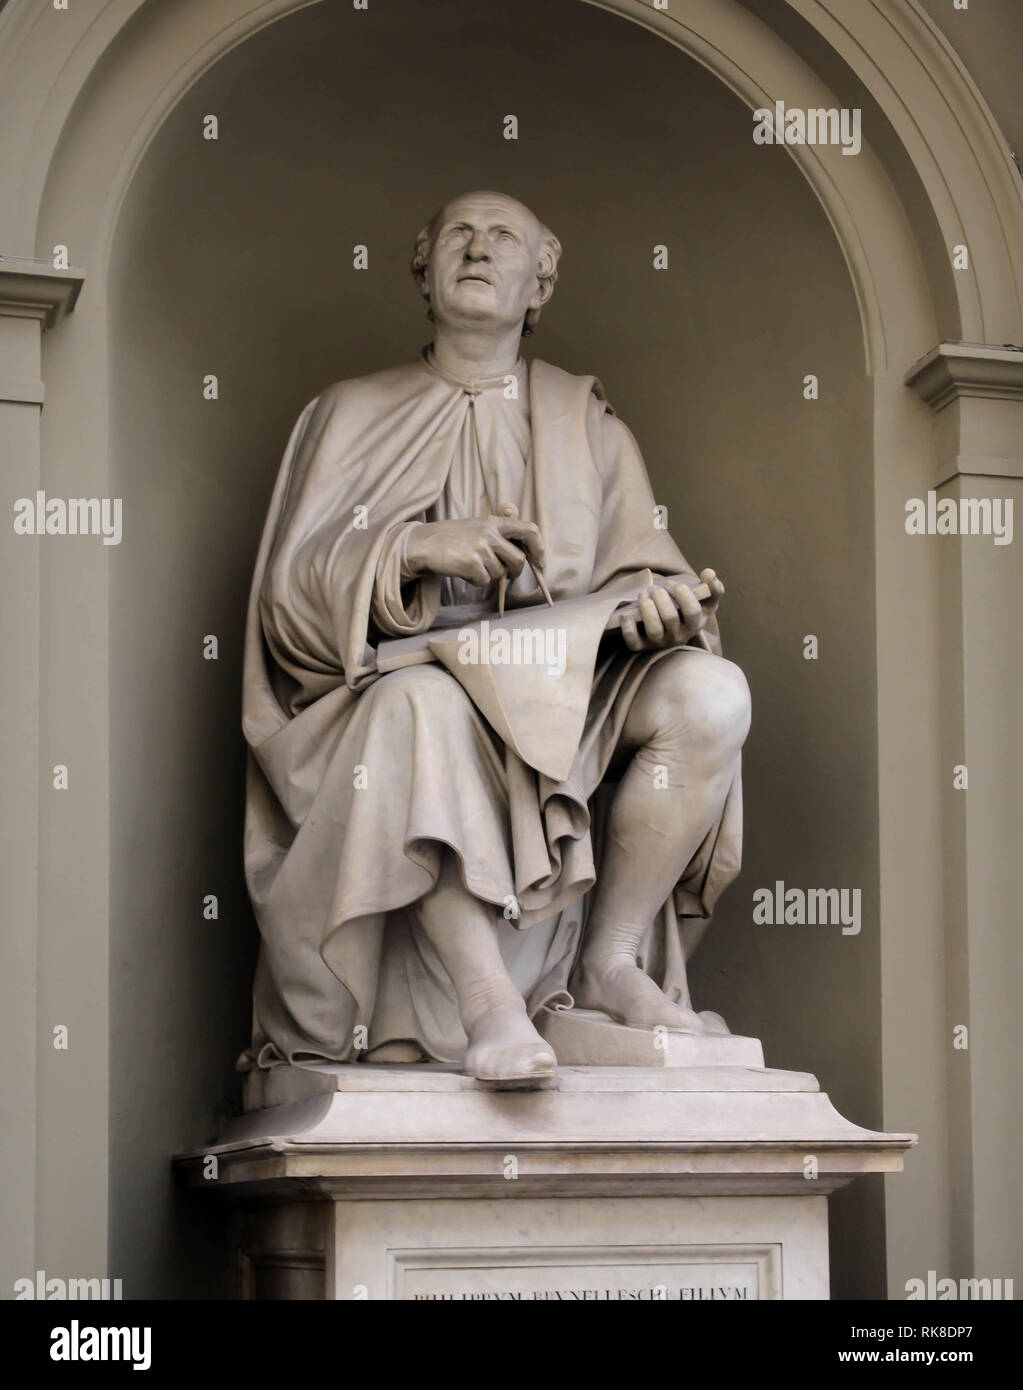 Estatua de Filippo Brunelleschi por Luigi Pampaloni. Arnolfo di Cambio fue un famoso arquitecto y escultor italiano del Renacimiento. Foto de stock